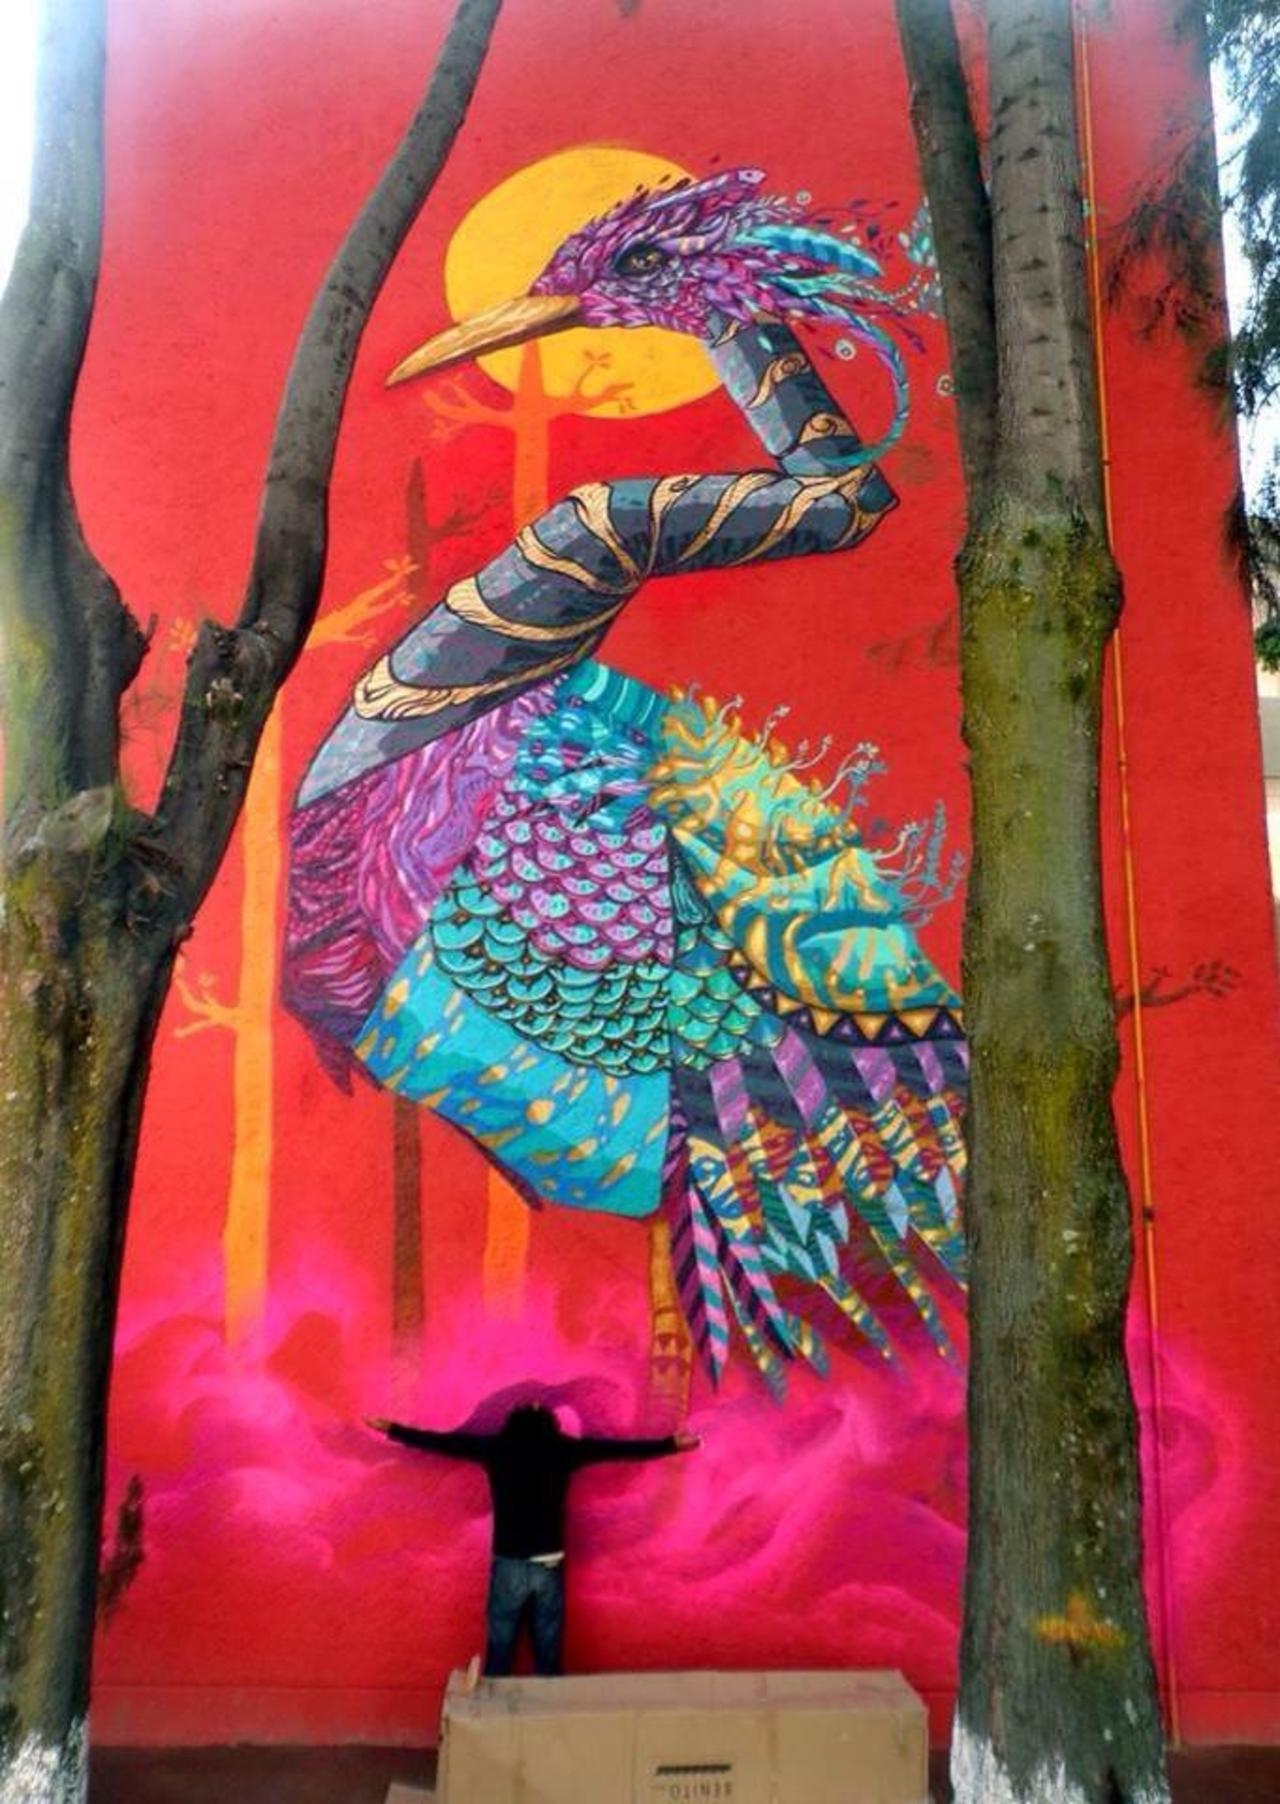 'Songs of Colour'

Sublime Nature in Street Art by NacHo Wm ft. Farid Rueda 

#art #arte #graffiti #streetart http://t.co/GhZLPLyeLM